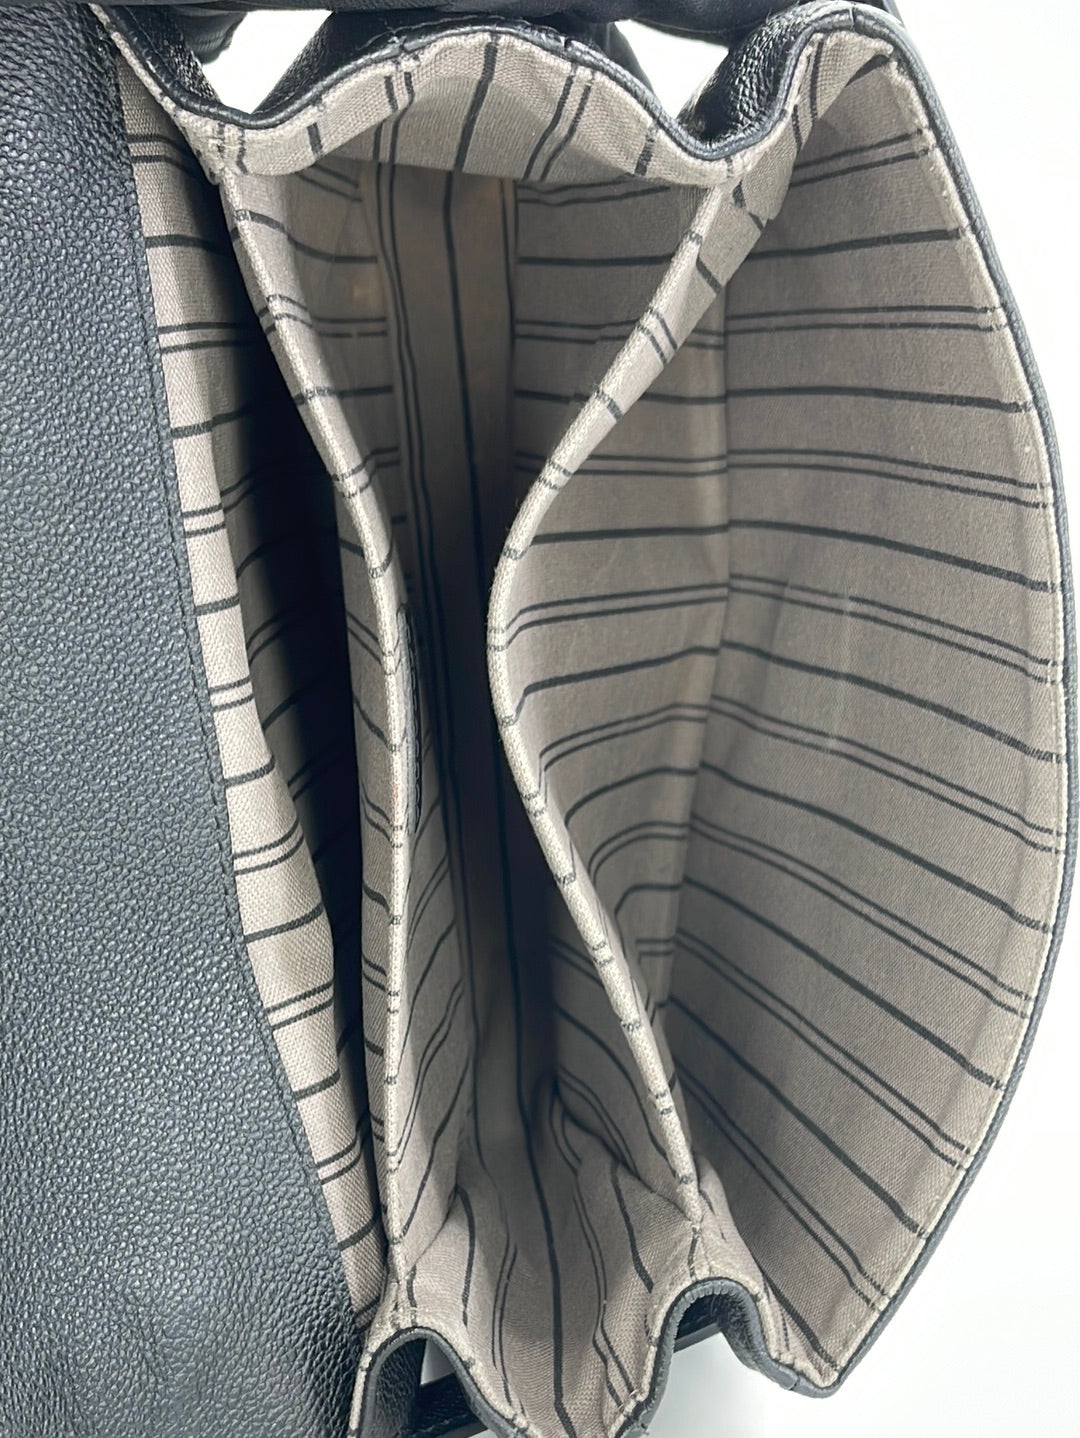 Preloved Louis Vuitton Pochette Metis Monogram Canvas Bag DU0166